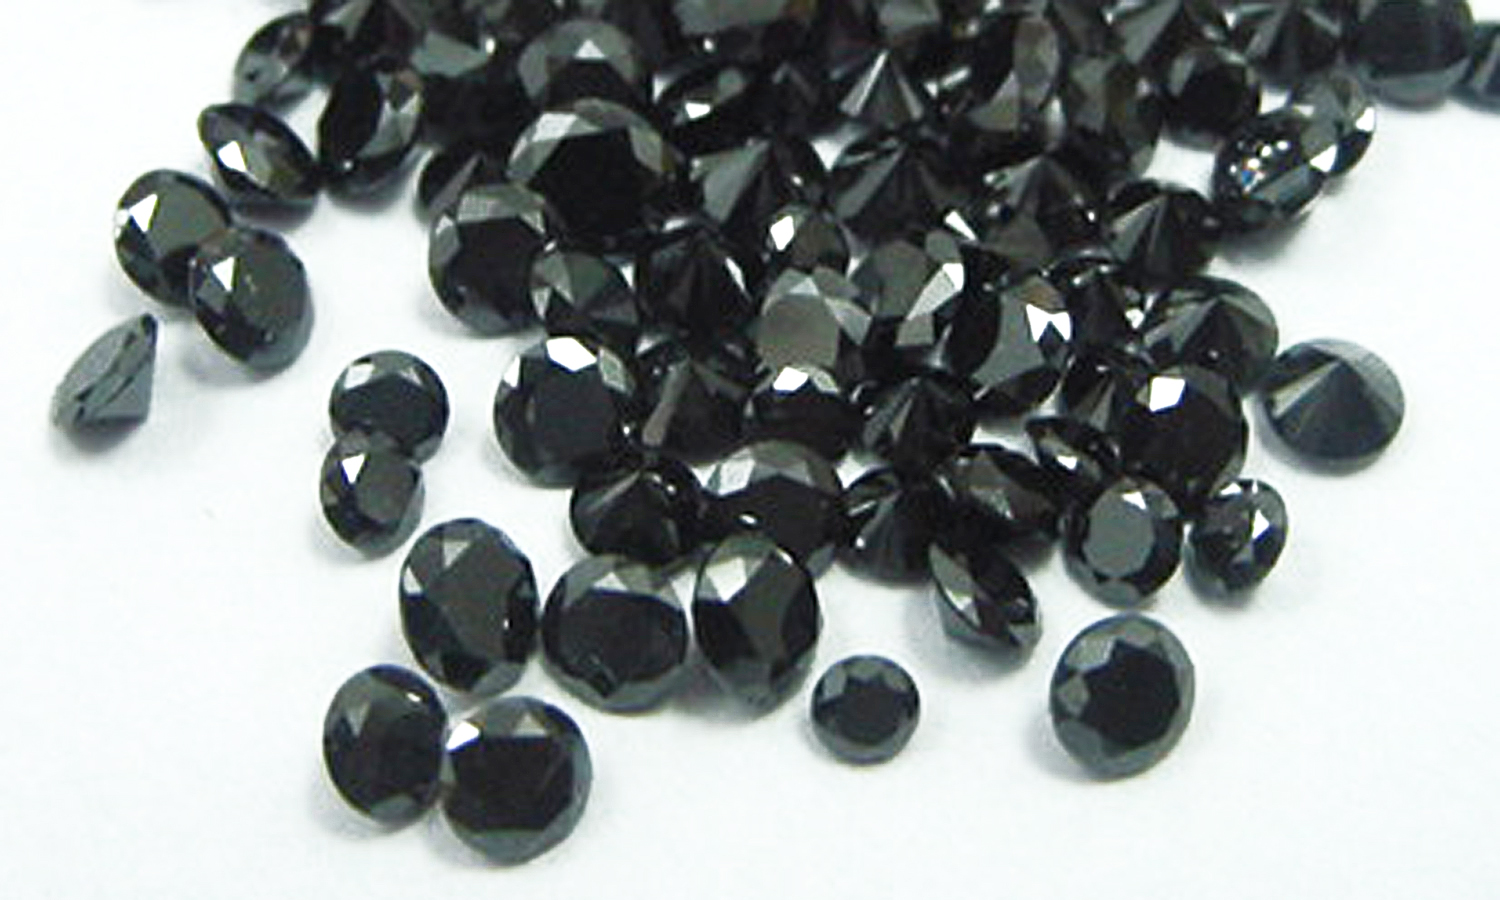 Loose Black Diamonds Polished loose diamonds: